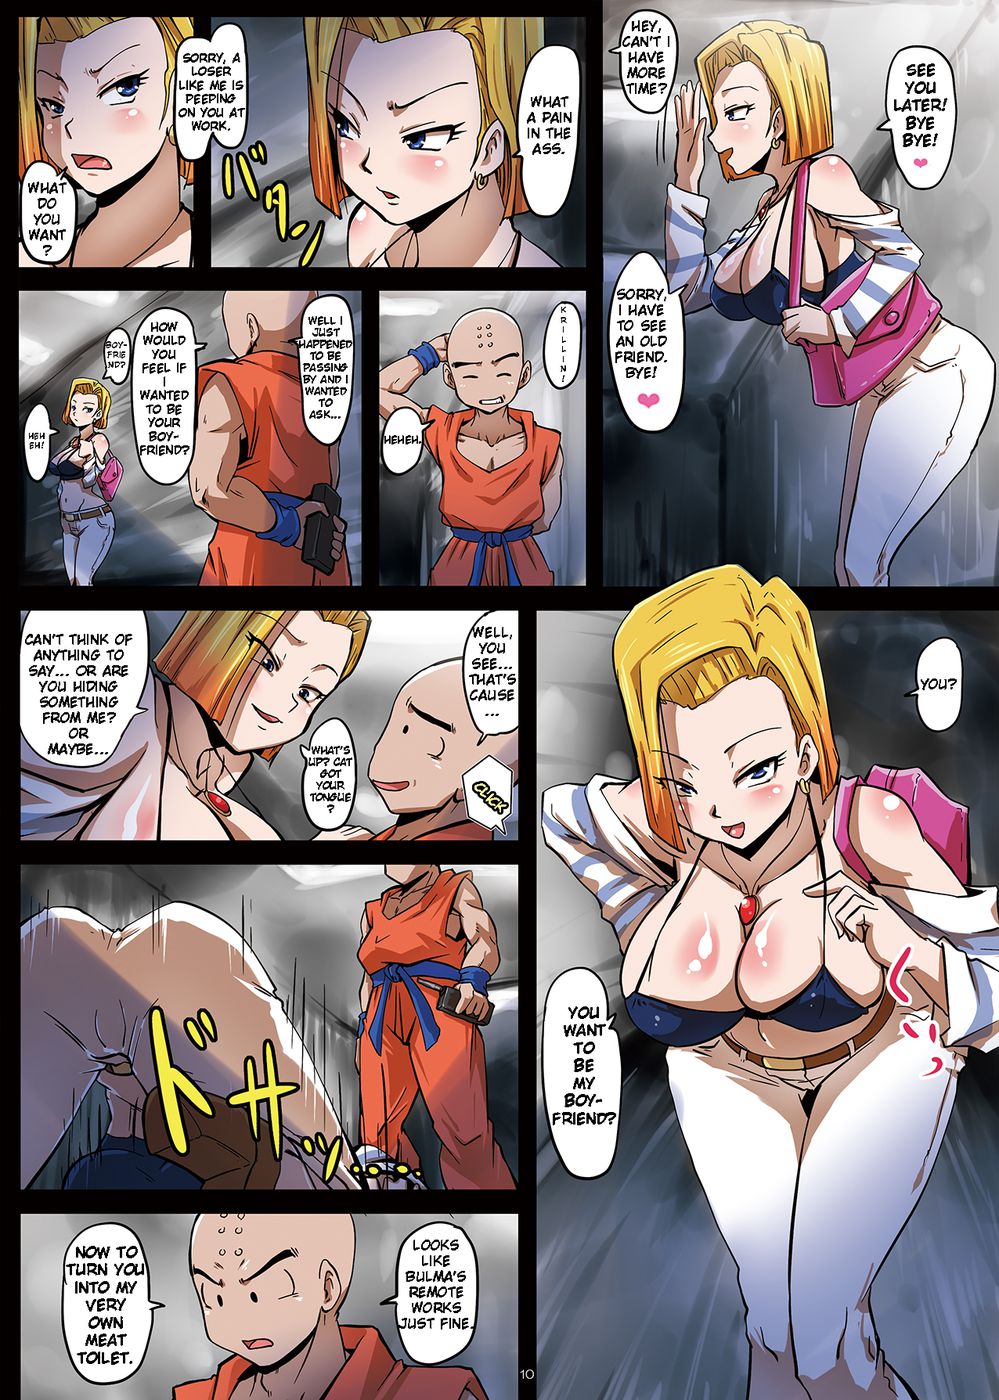 Hentai Manga Comic-The Plan to Subjugate 18 -Bulma and Krillin's Conspiracy to Turn 18 Into a Sex Slave-Read-11